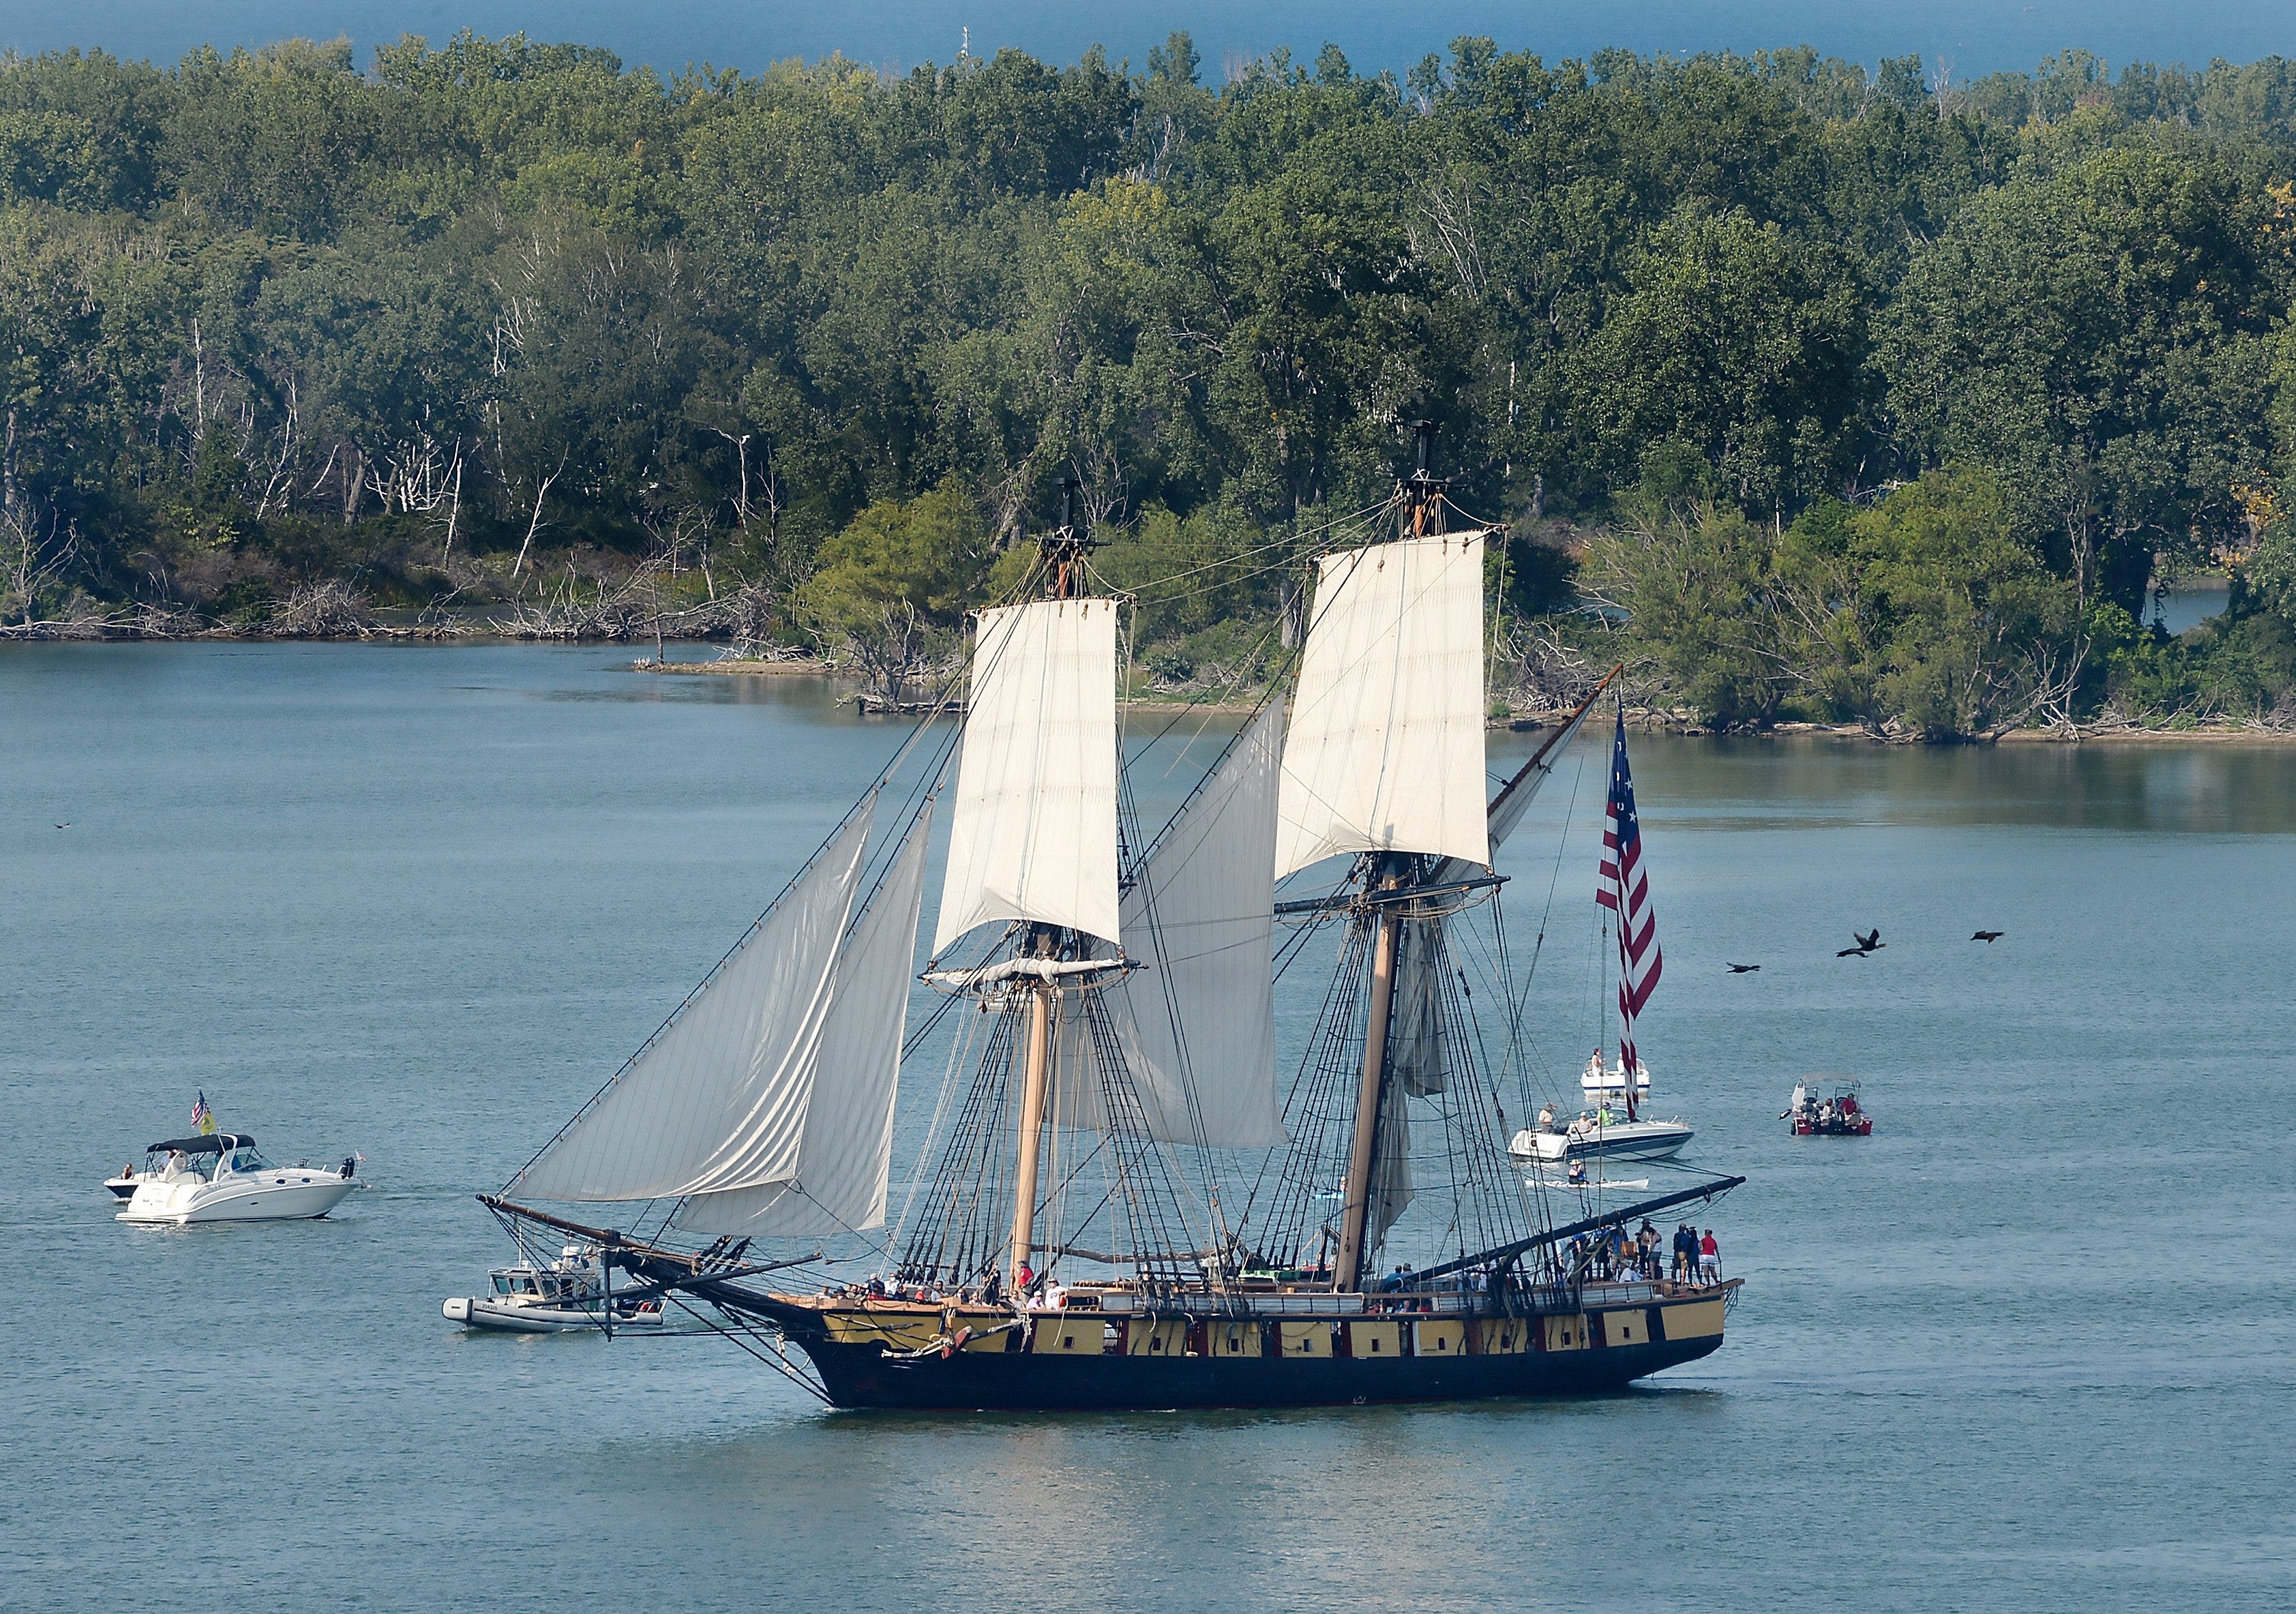 So the Brig Niagara won't sail in 2024? Let's bring back the Scorpion schooner